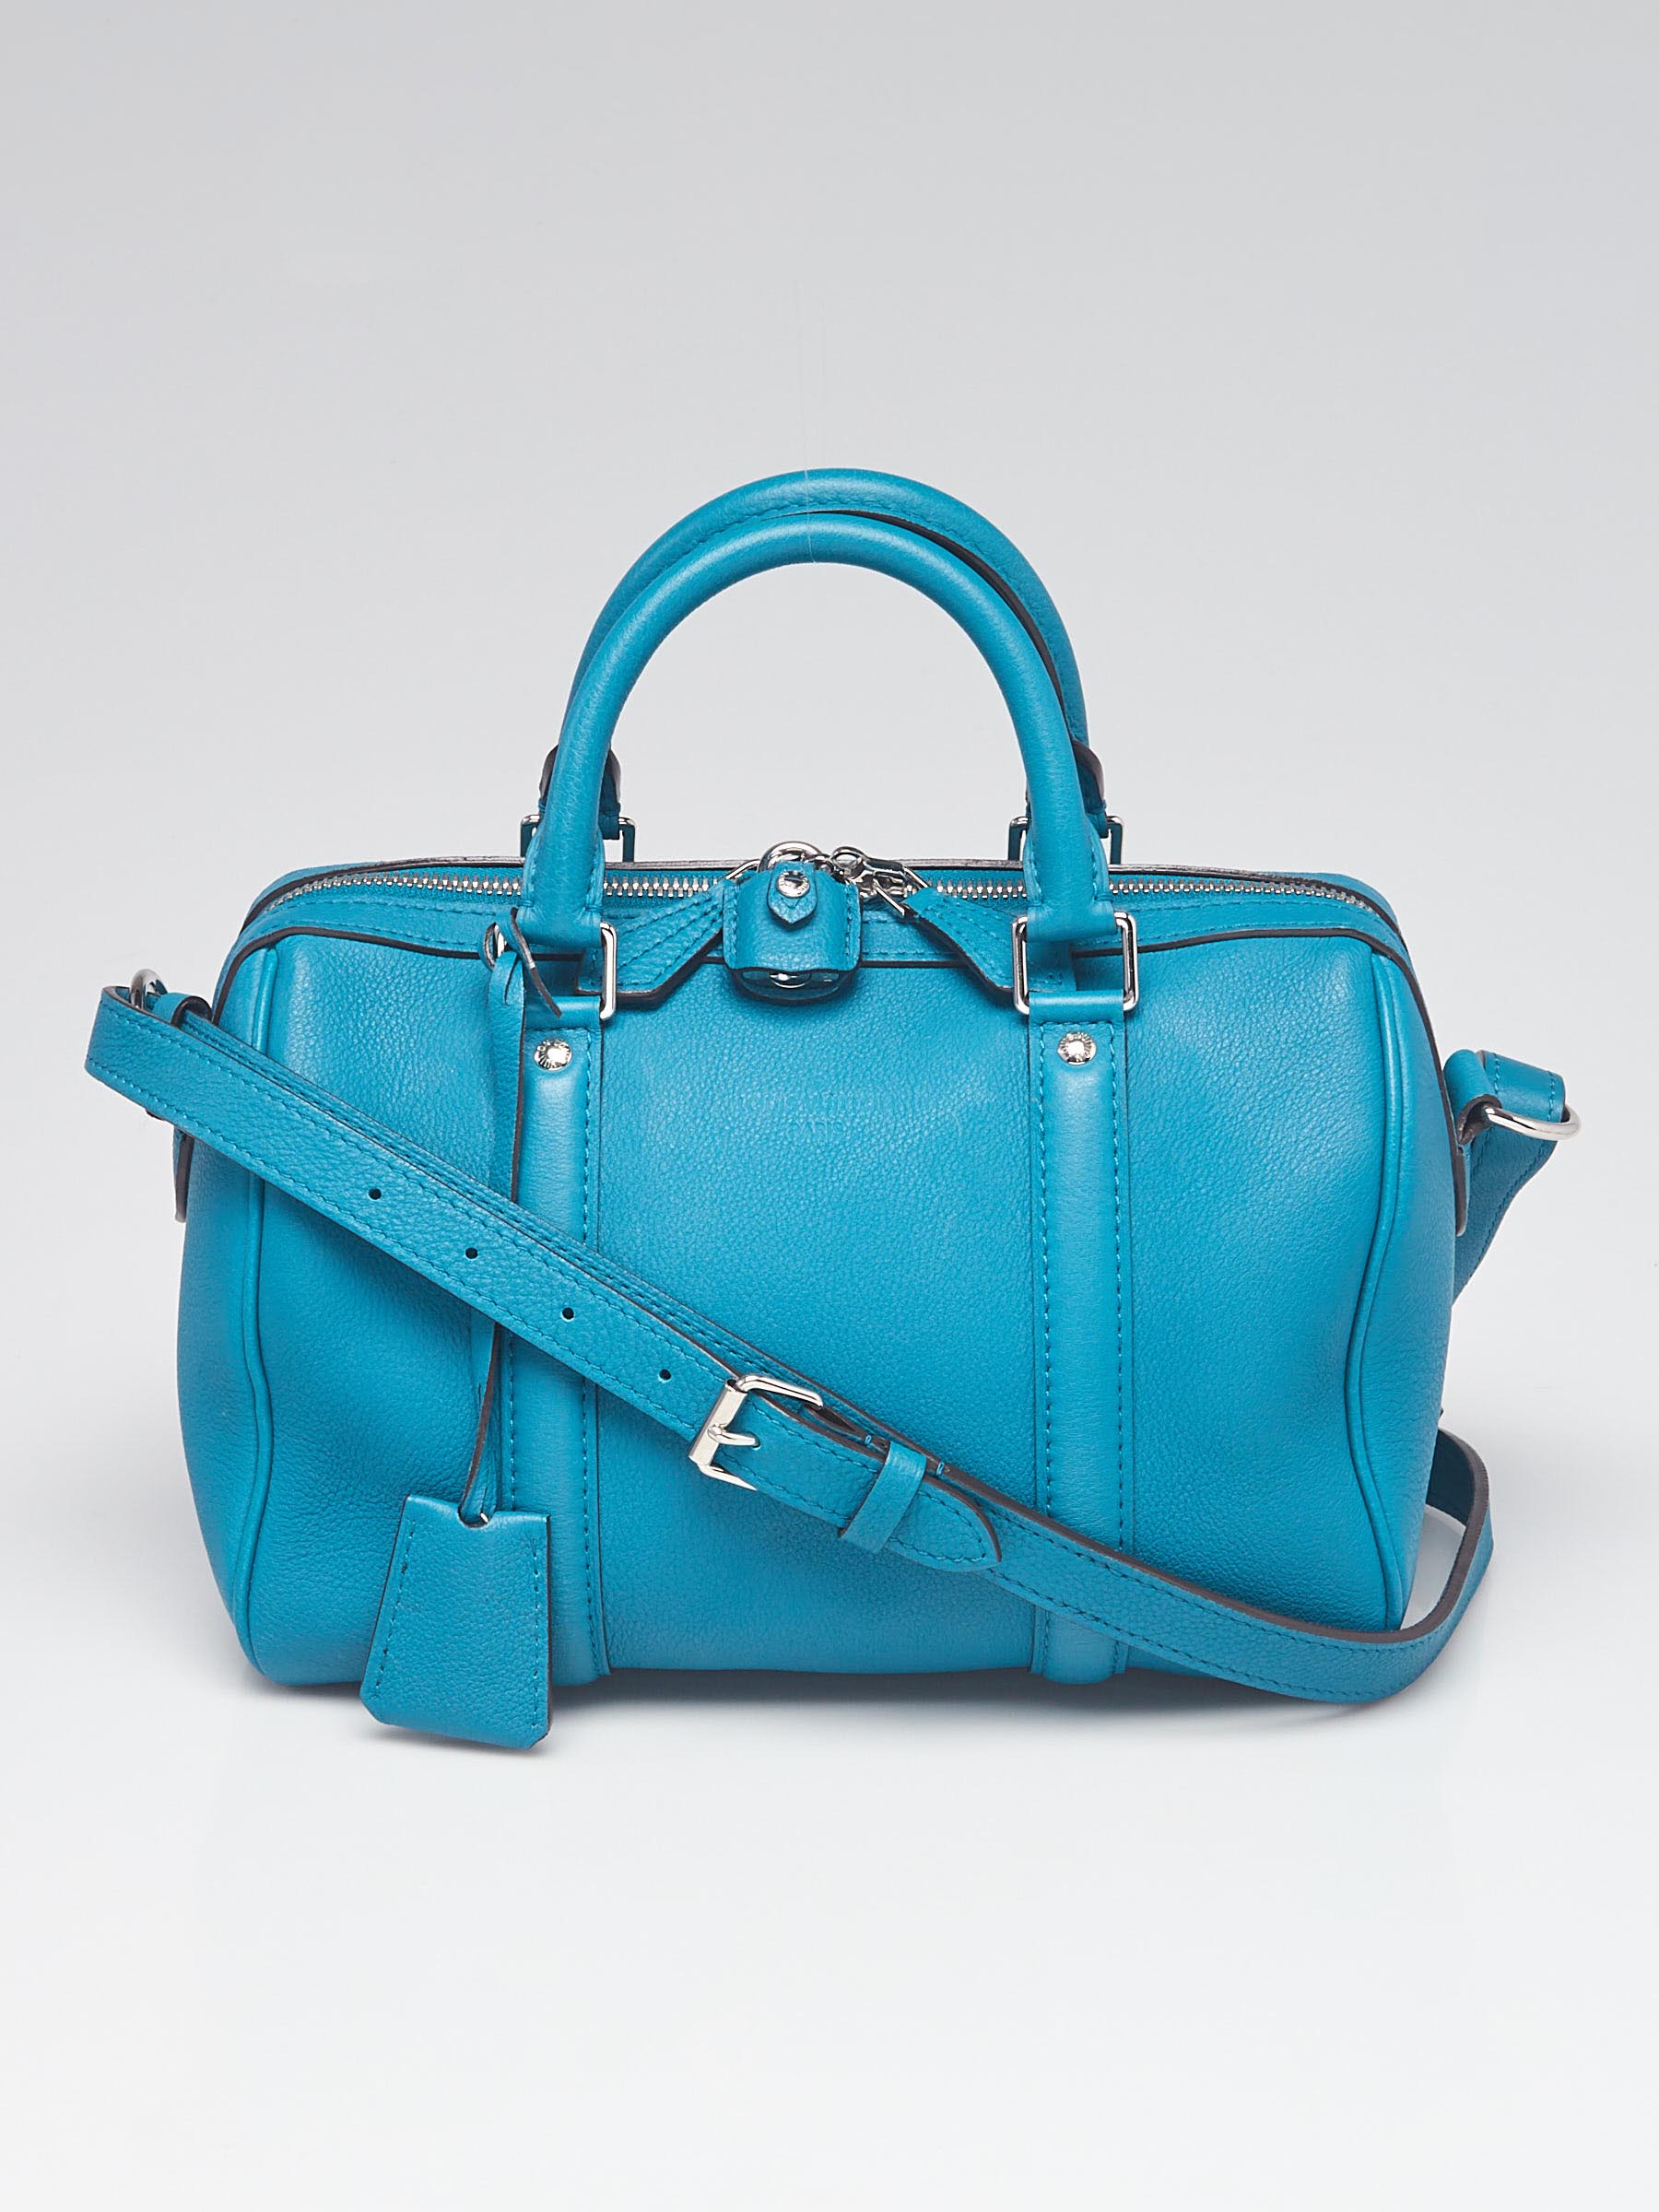 Sofia Coppola's New Louis Vuitton Bags Collection